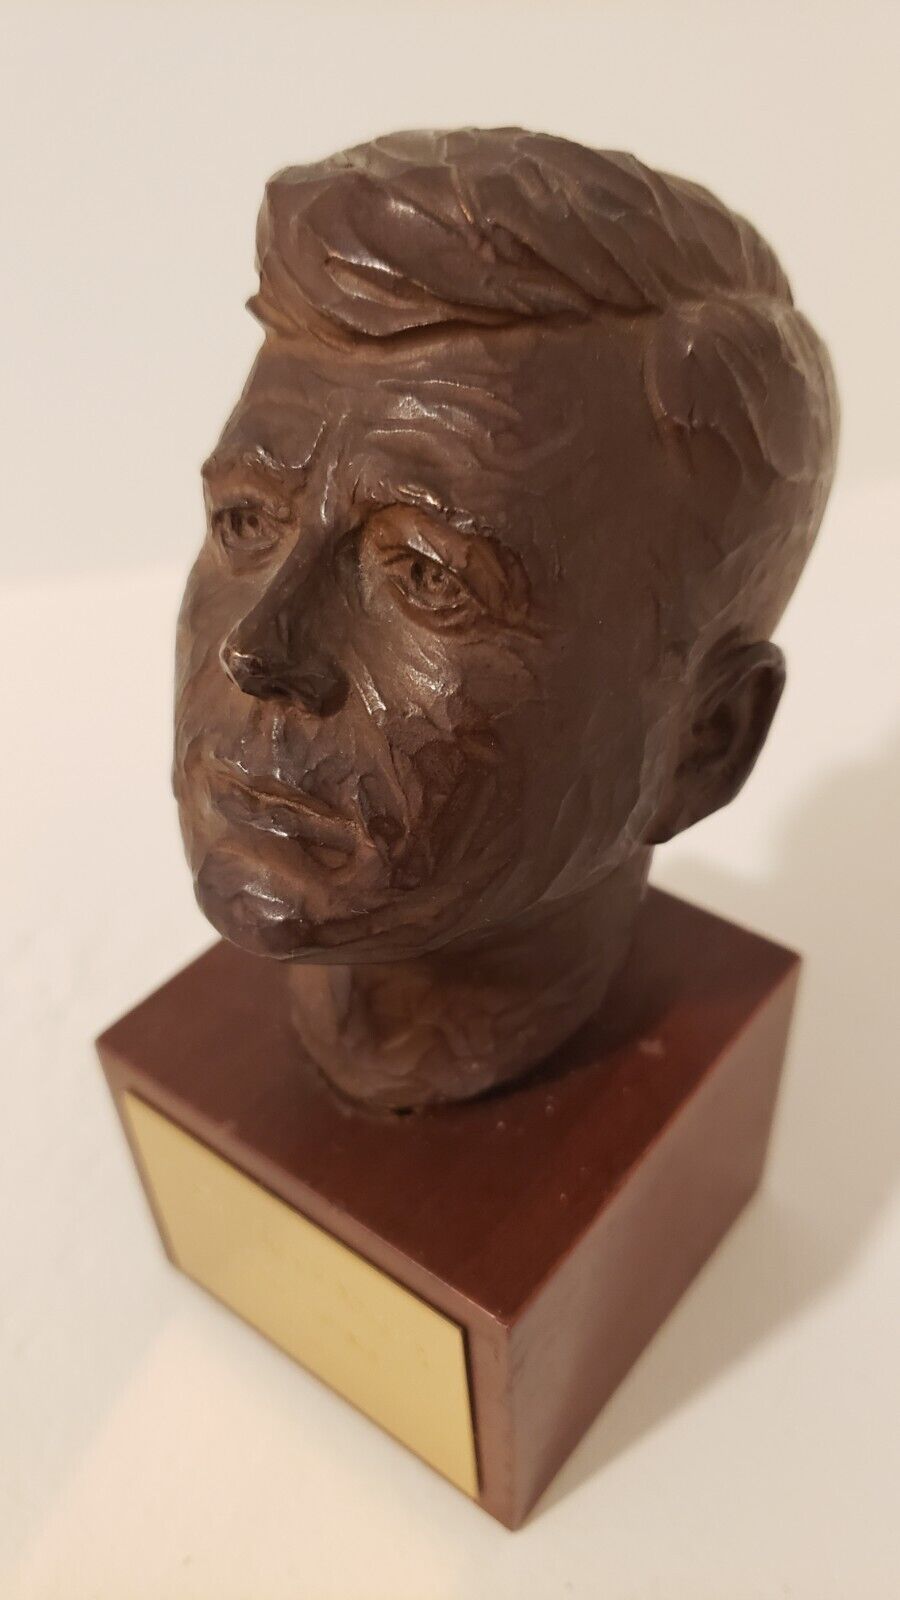 *ULTRA RARE* 1961 President John F. Kennedy Bronze Bust by Philip Kraczkowski